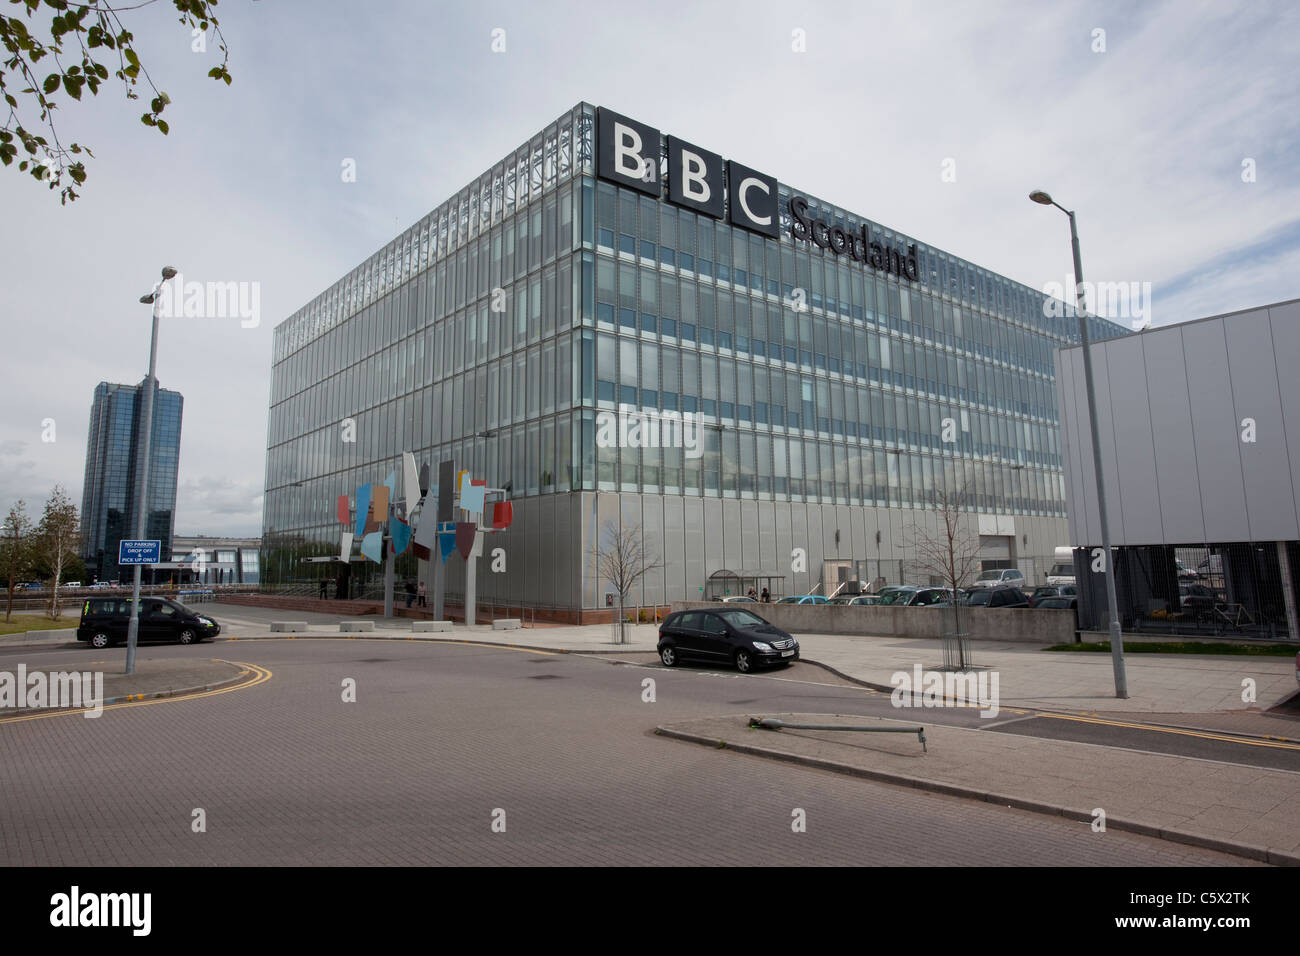 BBC Schottland an den Ufern des Flusses Clyde, Glasgow. Foto: Jeff Gilbert Stockfoto